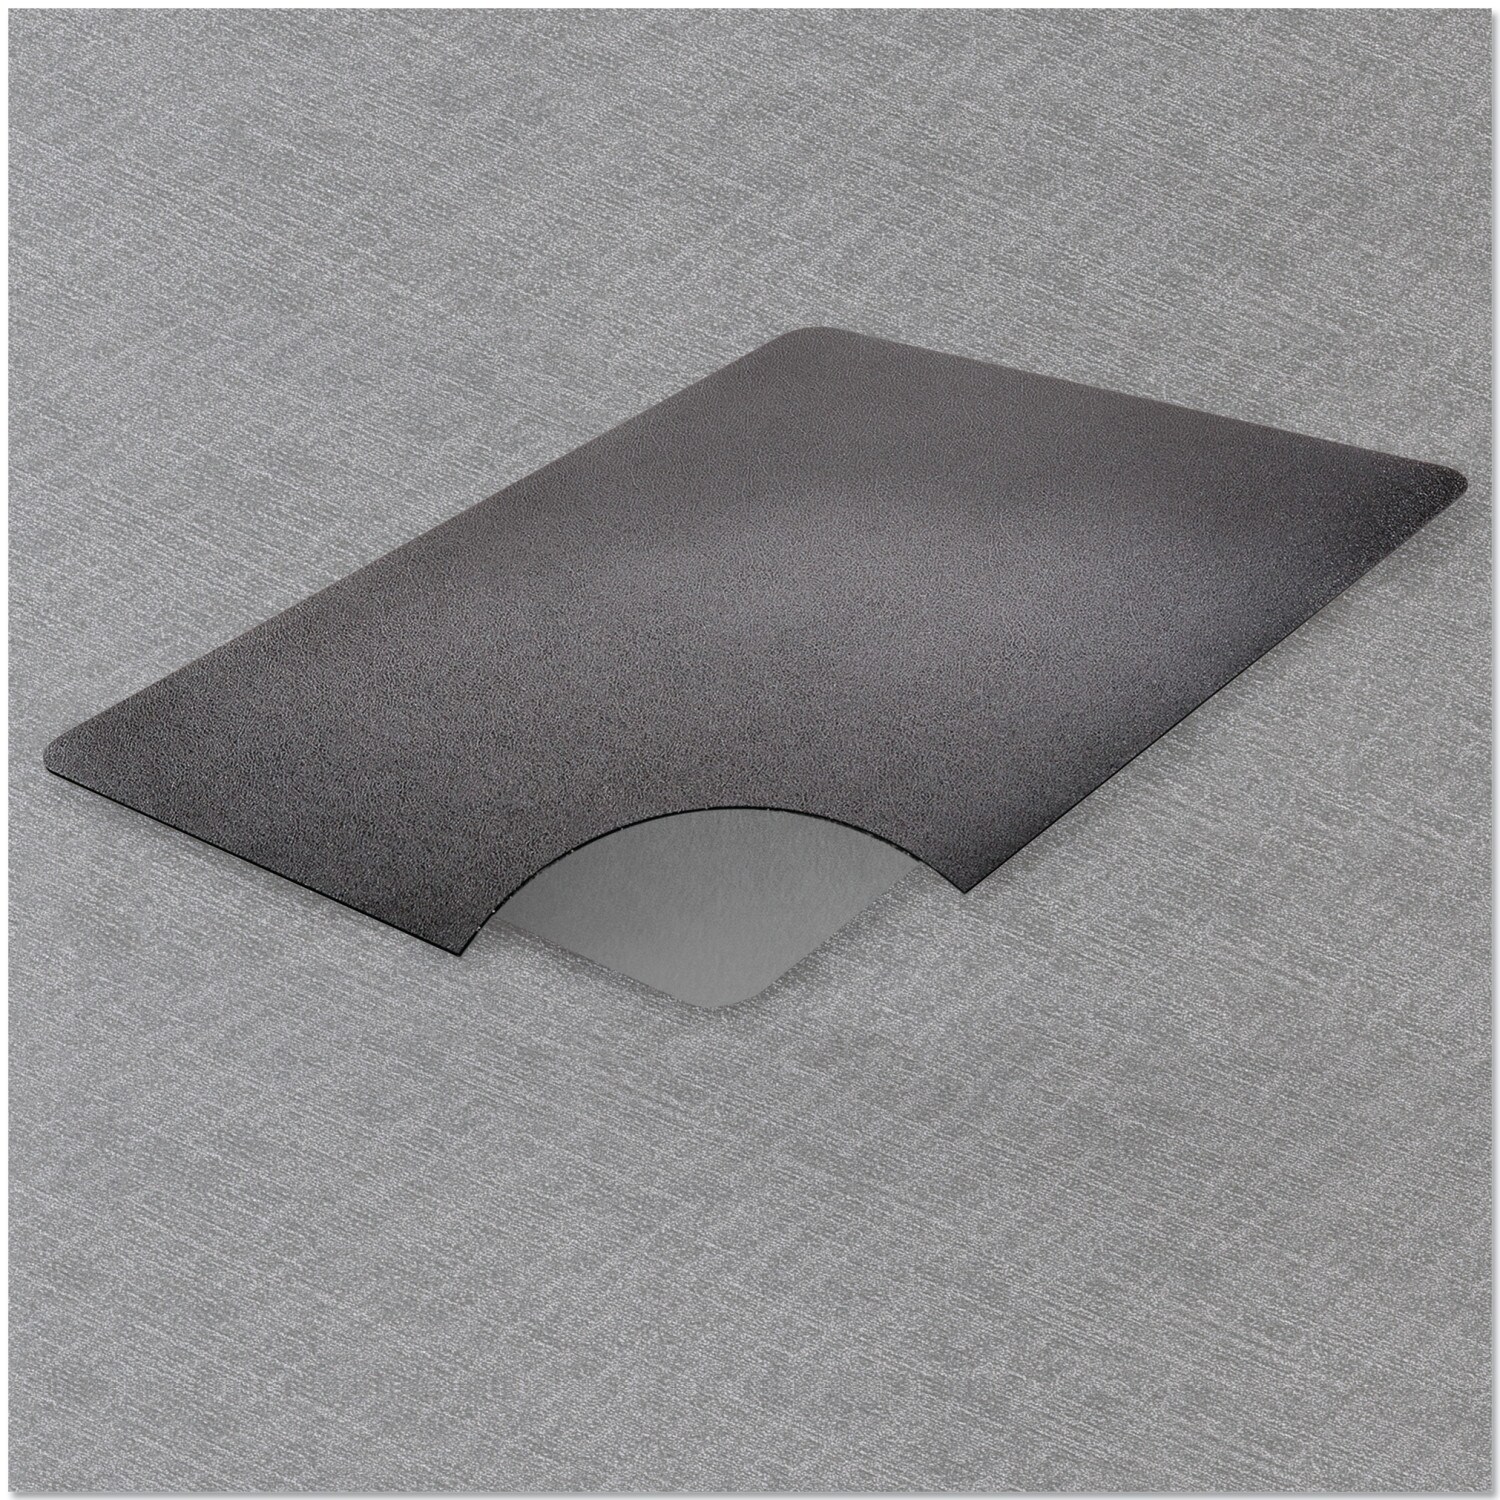 Deflecto Anti-Fatigue Mat, 24 x 36 x 3/4 Inches, Black